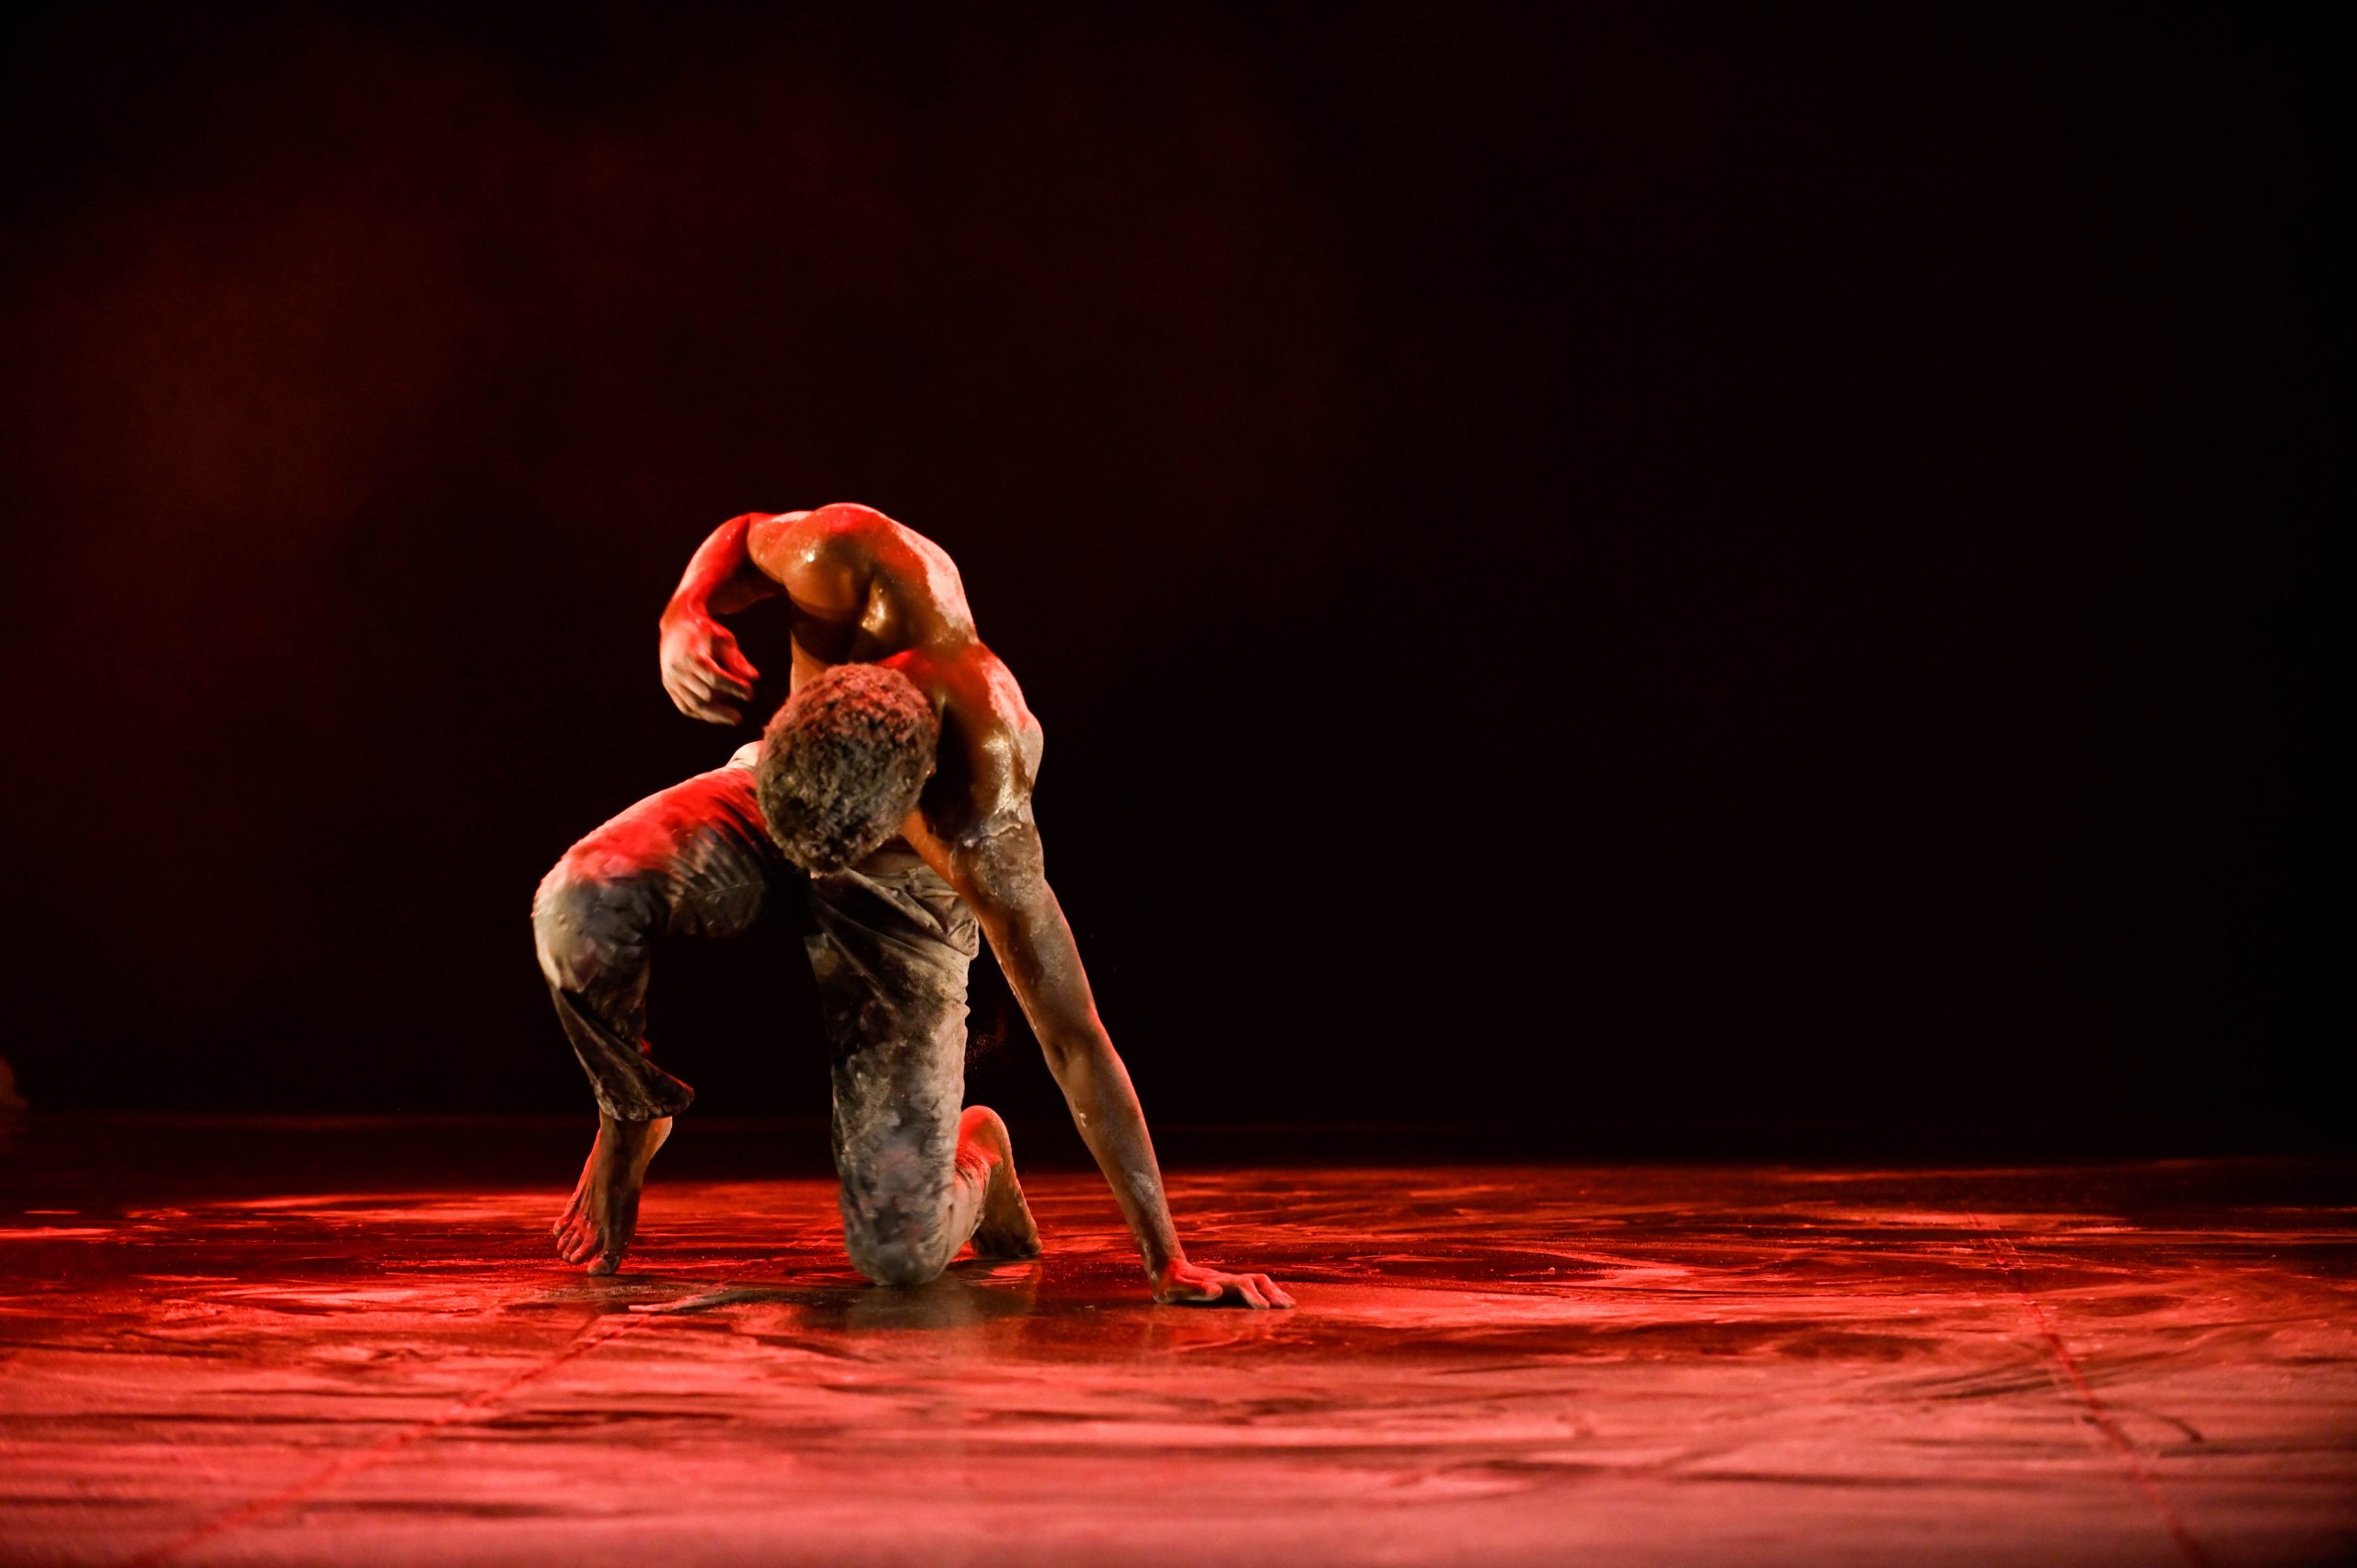 Deus Nos Acudi - God Help Us: Ο βραβευμένος χορευτής Pak Ndjamena σε μια solo performance στο Θέατρο Nous